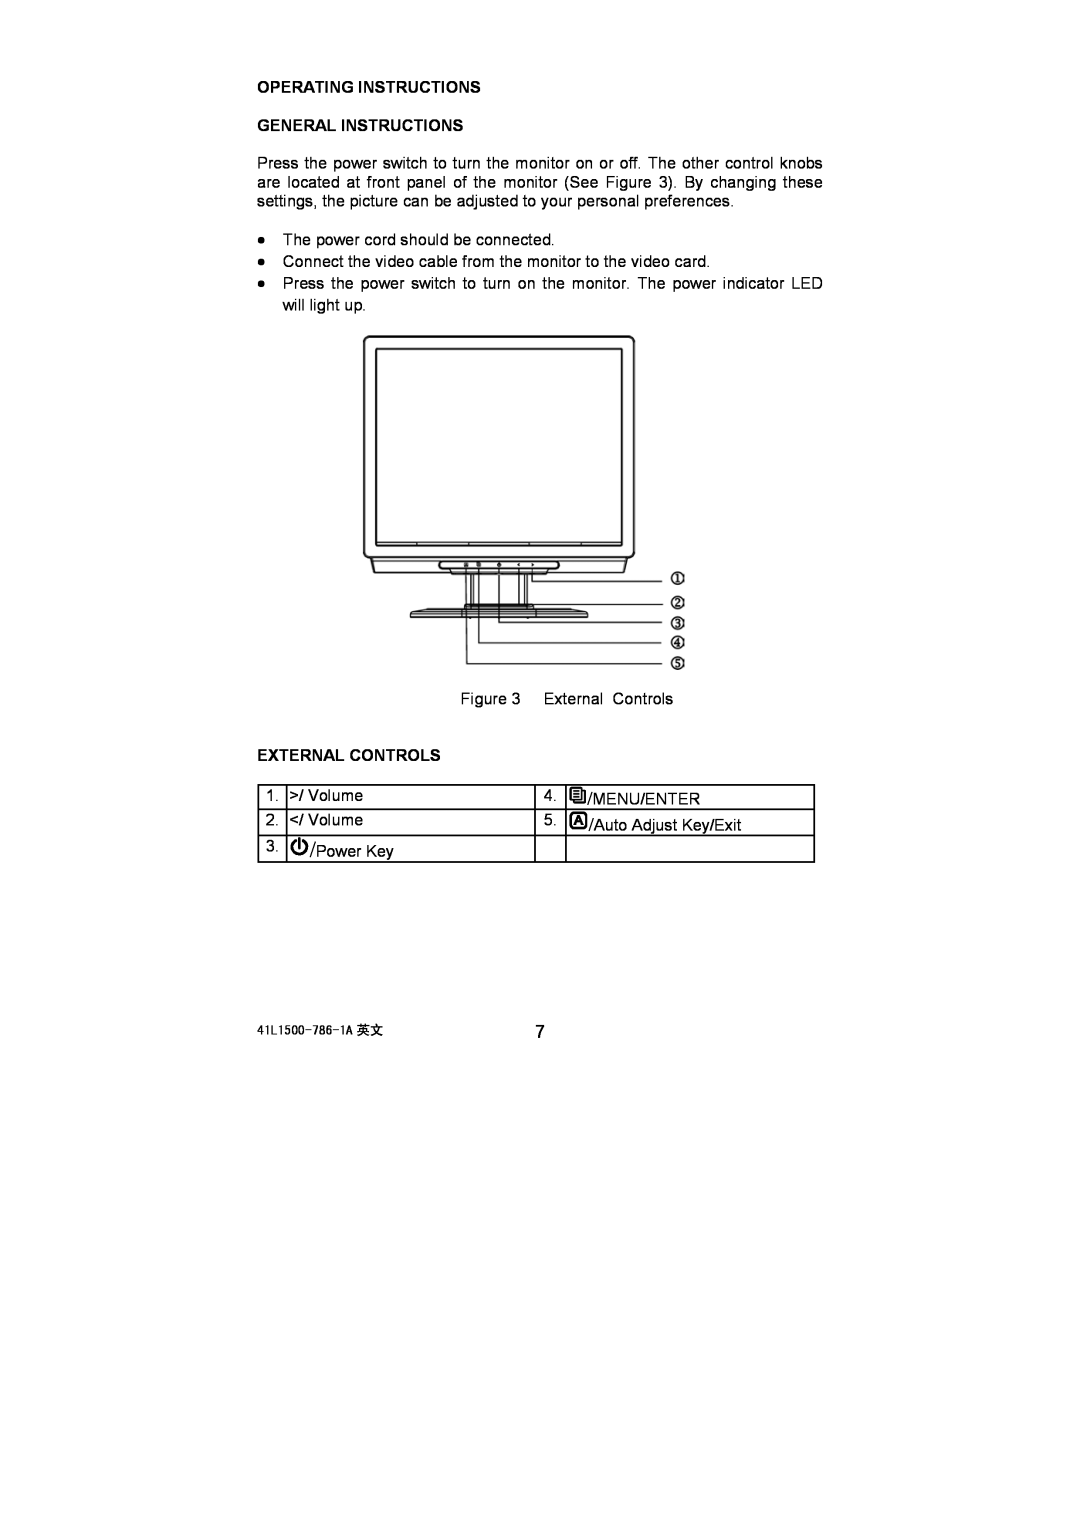 Acer AL1521, 41L1500-786-1A installation instructions Operating Instructions General Instructions, External Controls 